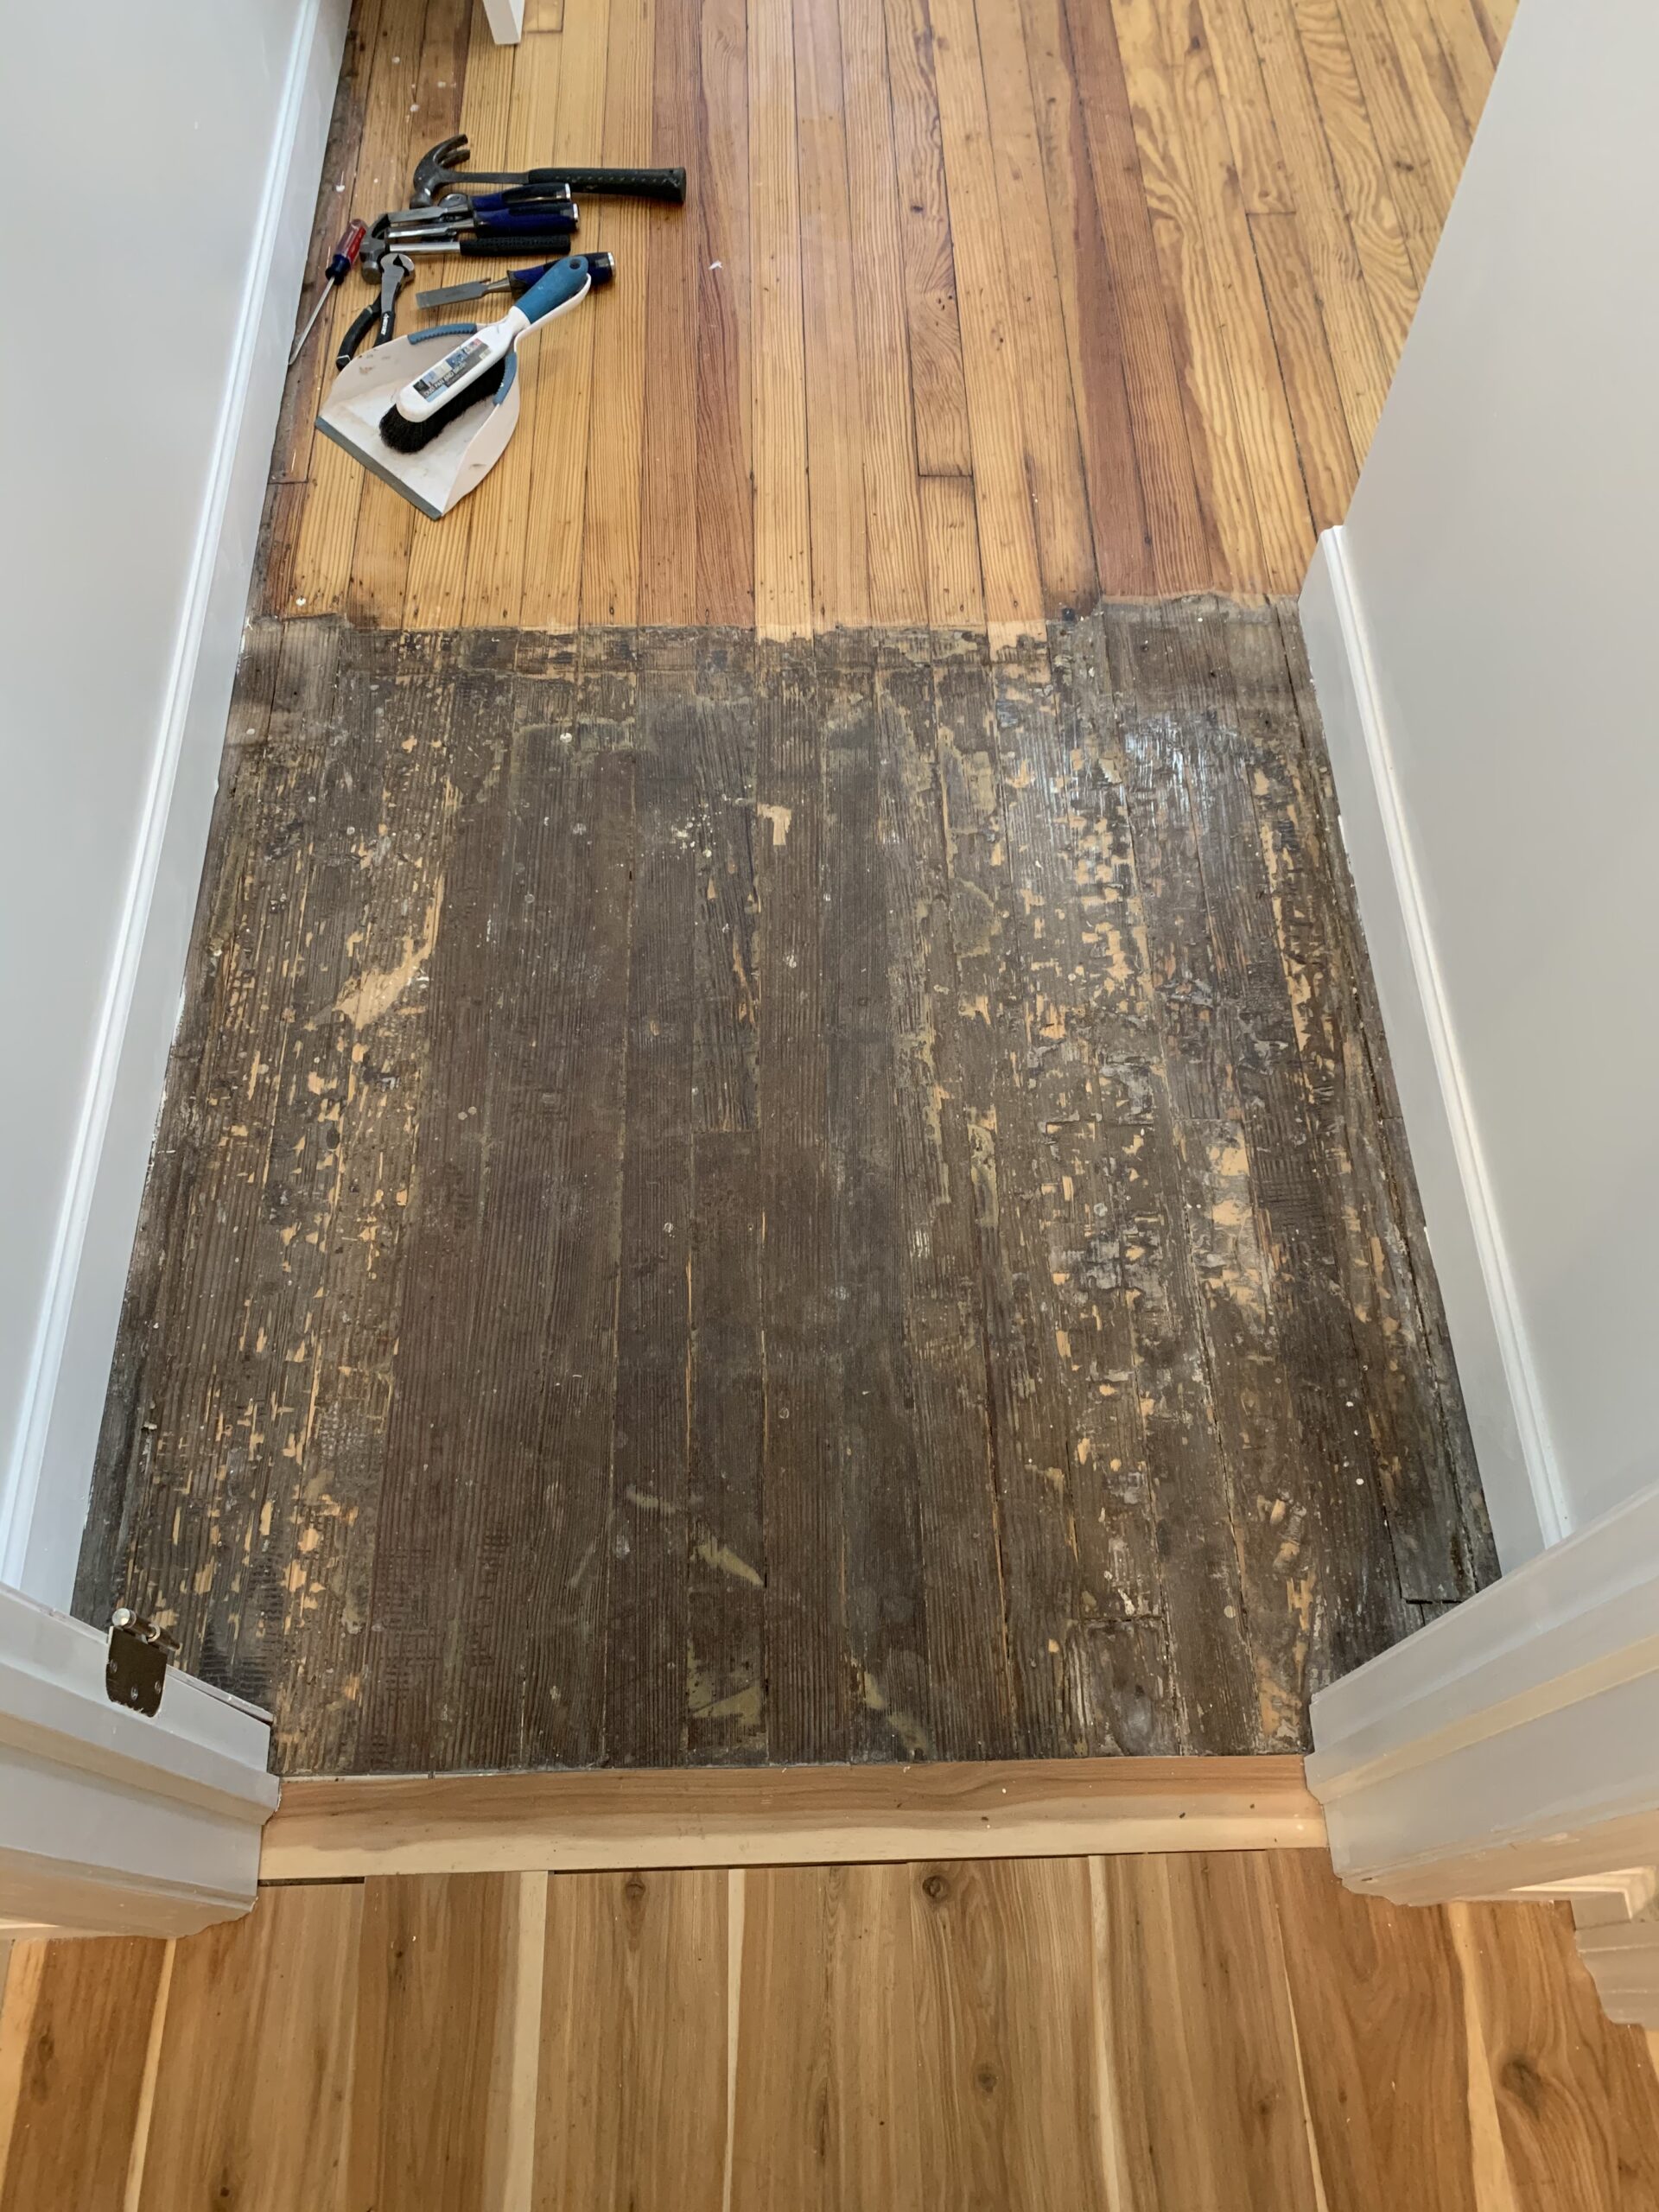 how to refinish hardwood floors – basic DIY tutorial